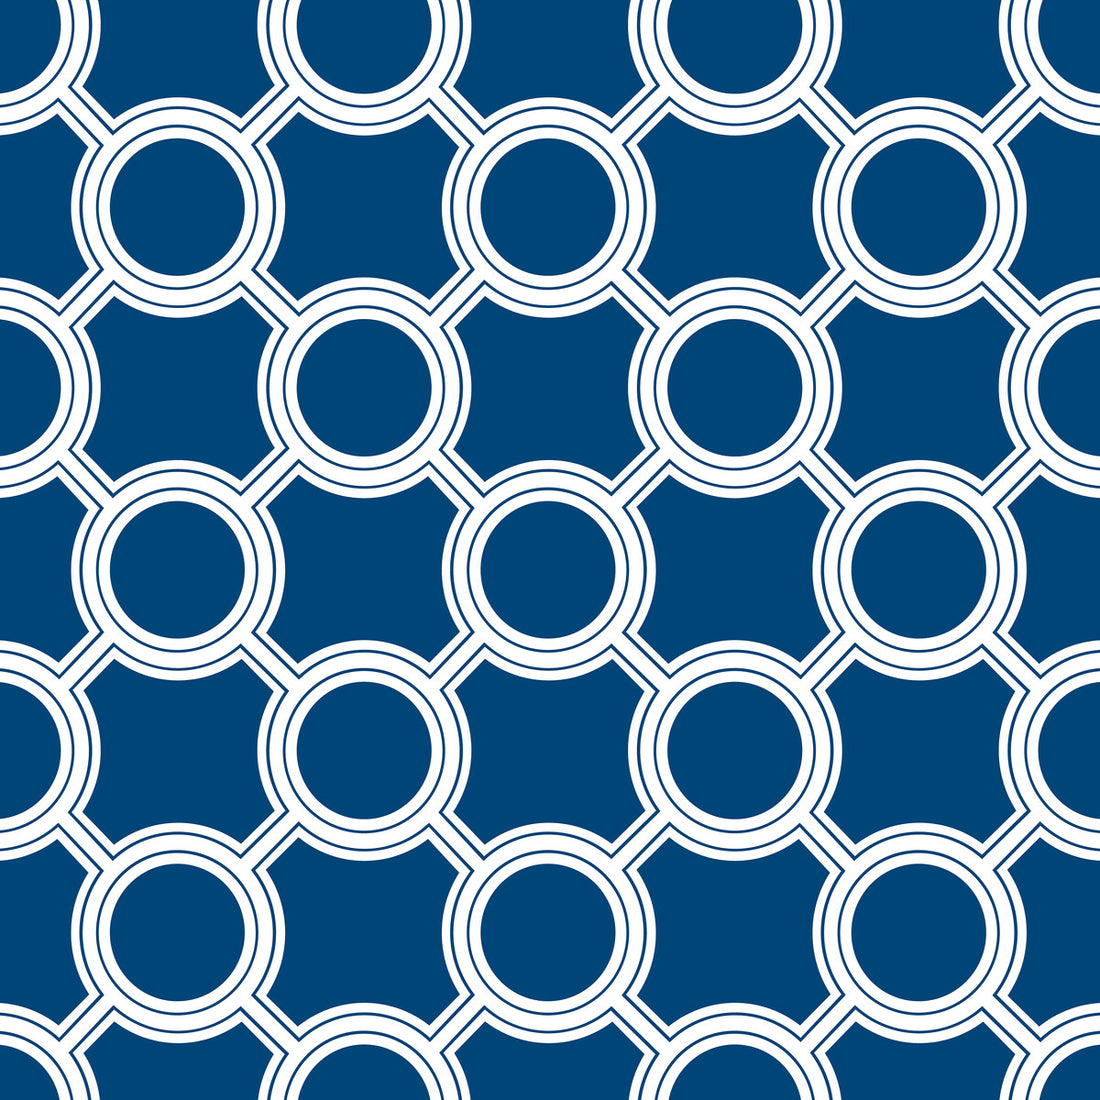 Aymara fabric in azul color - pattern GDT5600.003.0 - by Gaston y Daniela in the Gaston Nuevo Mundo collection